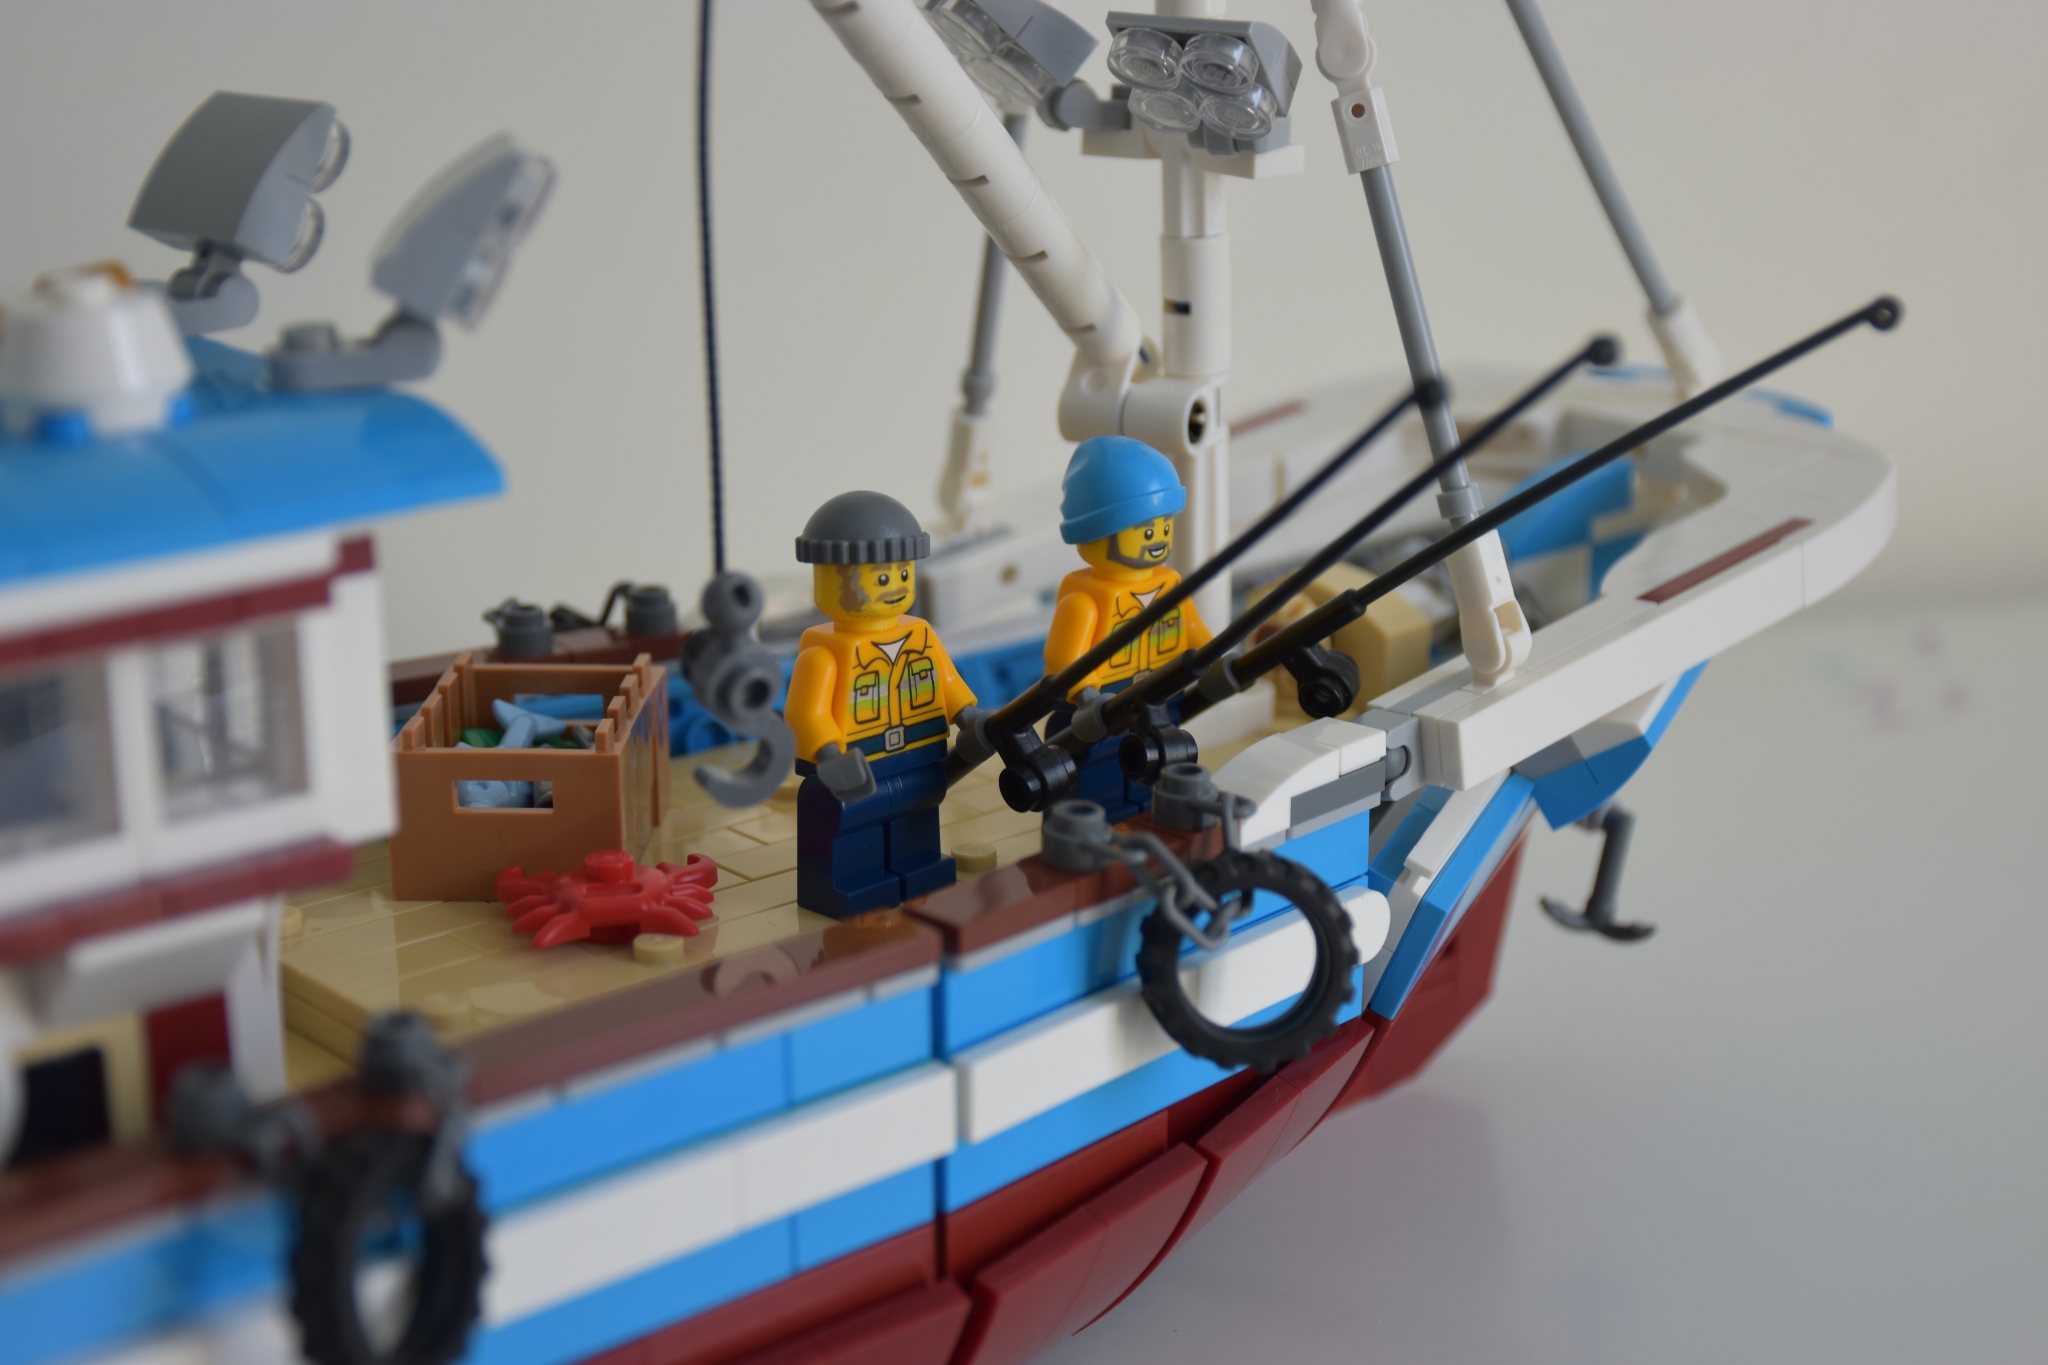 Great Fishing Boat ] [BrickLink]